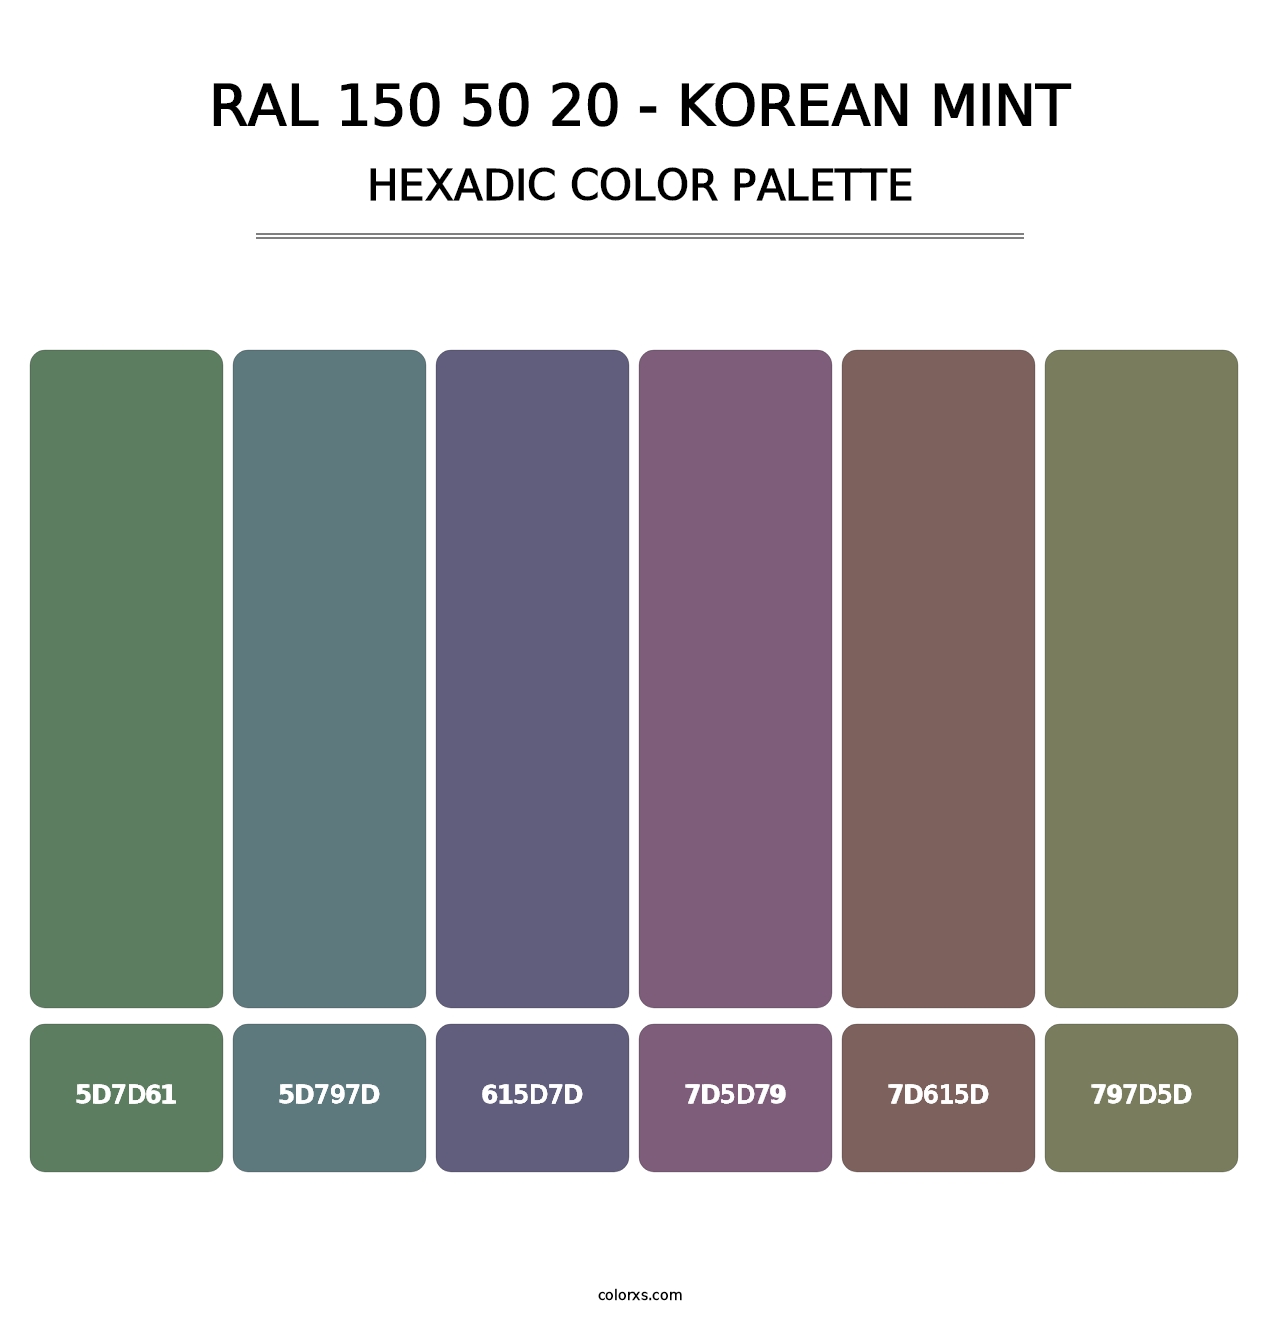 RAL 150 50 20 - Korean Mint - Hexadic Color Palette